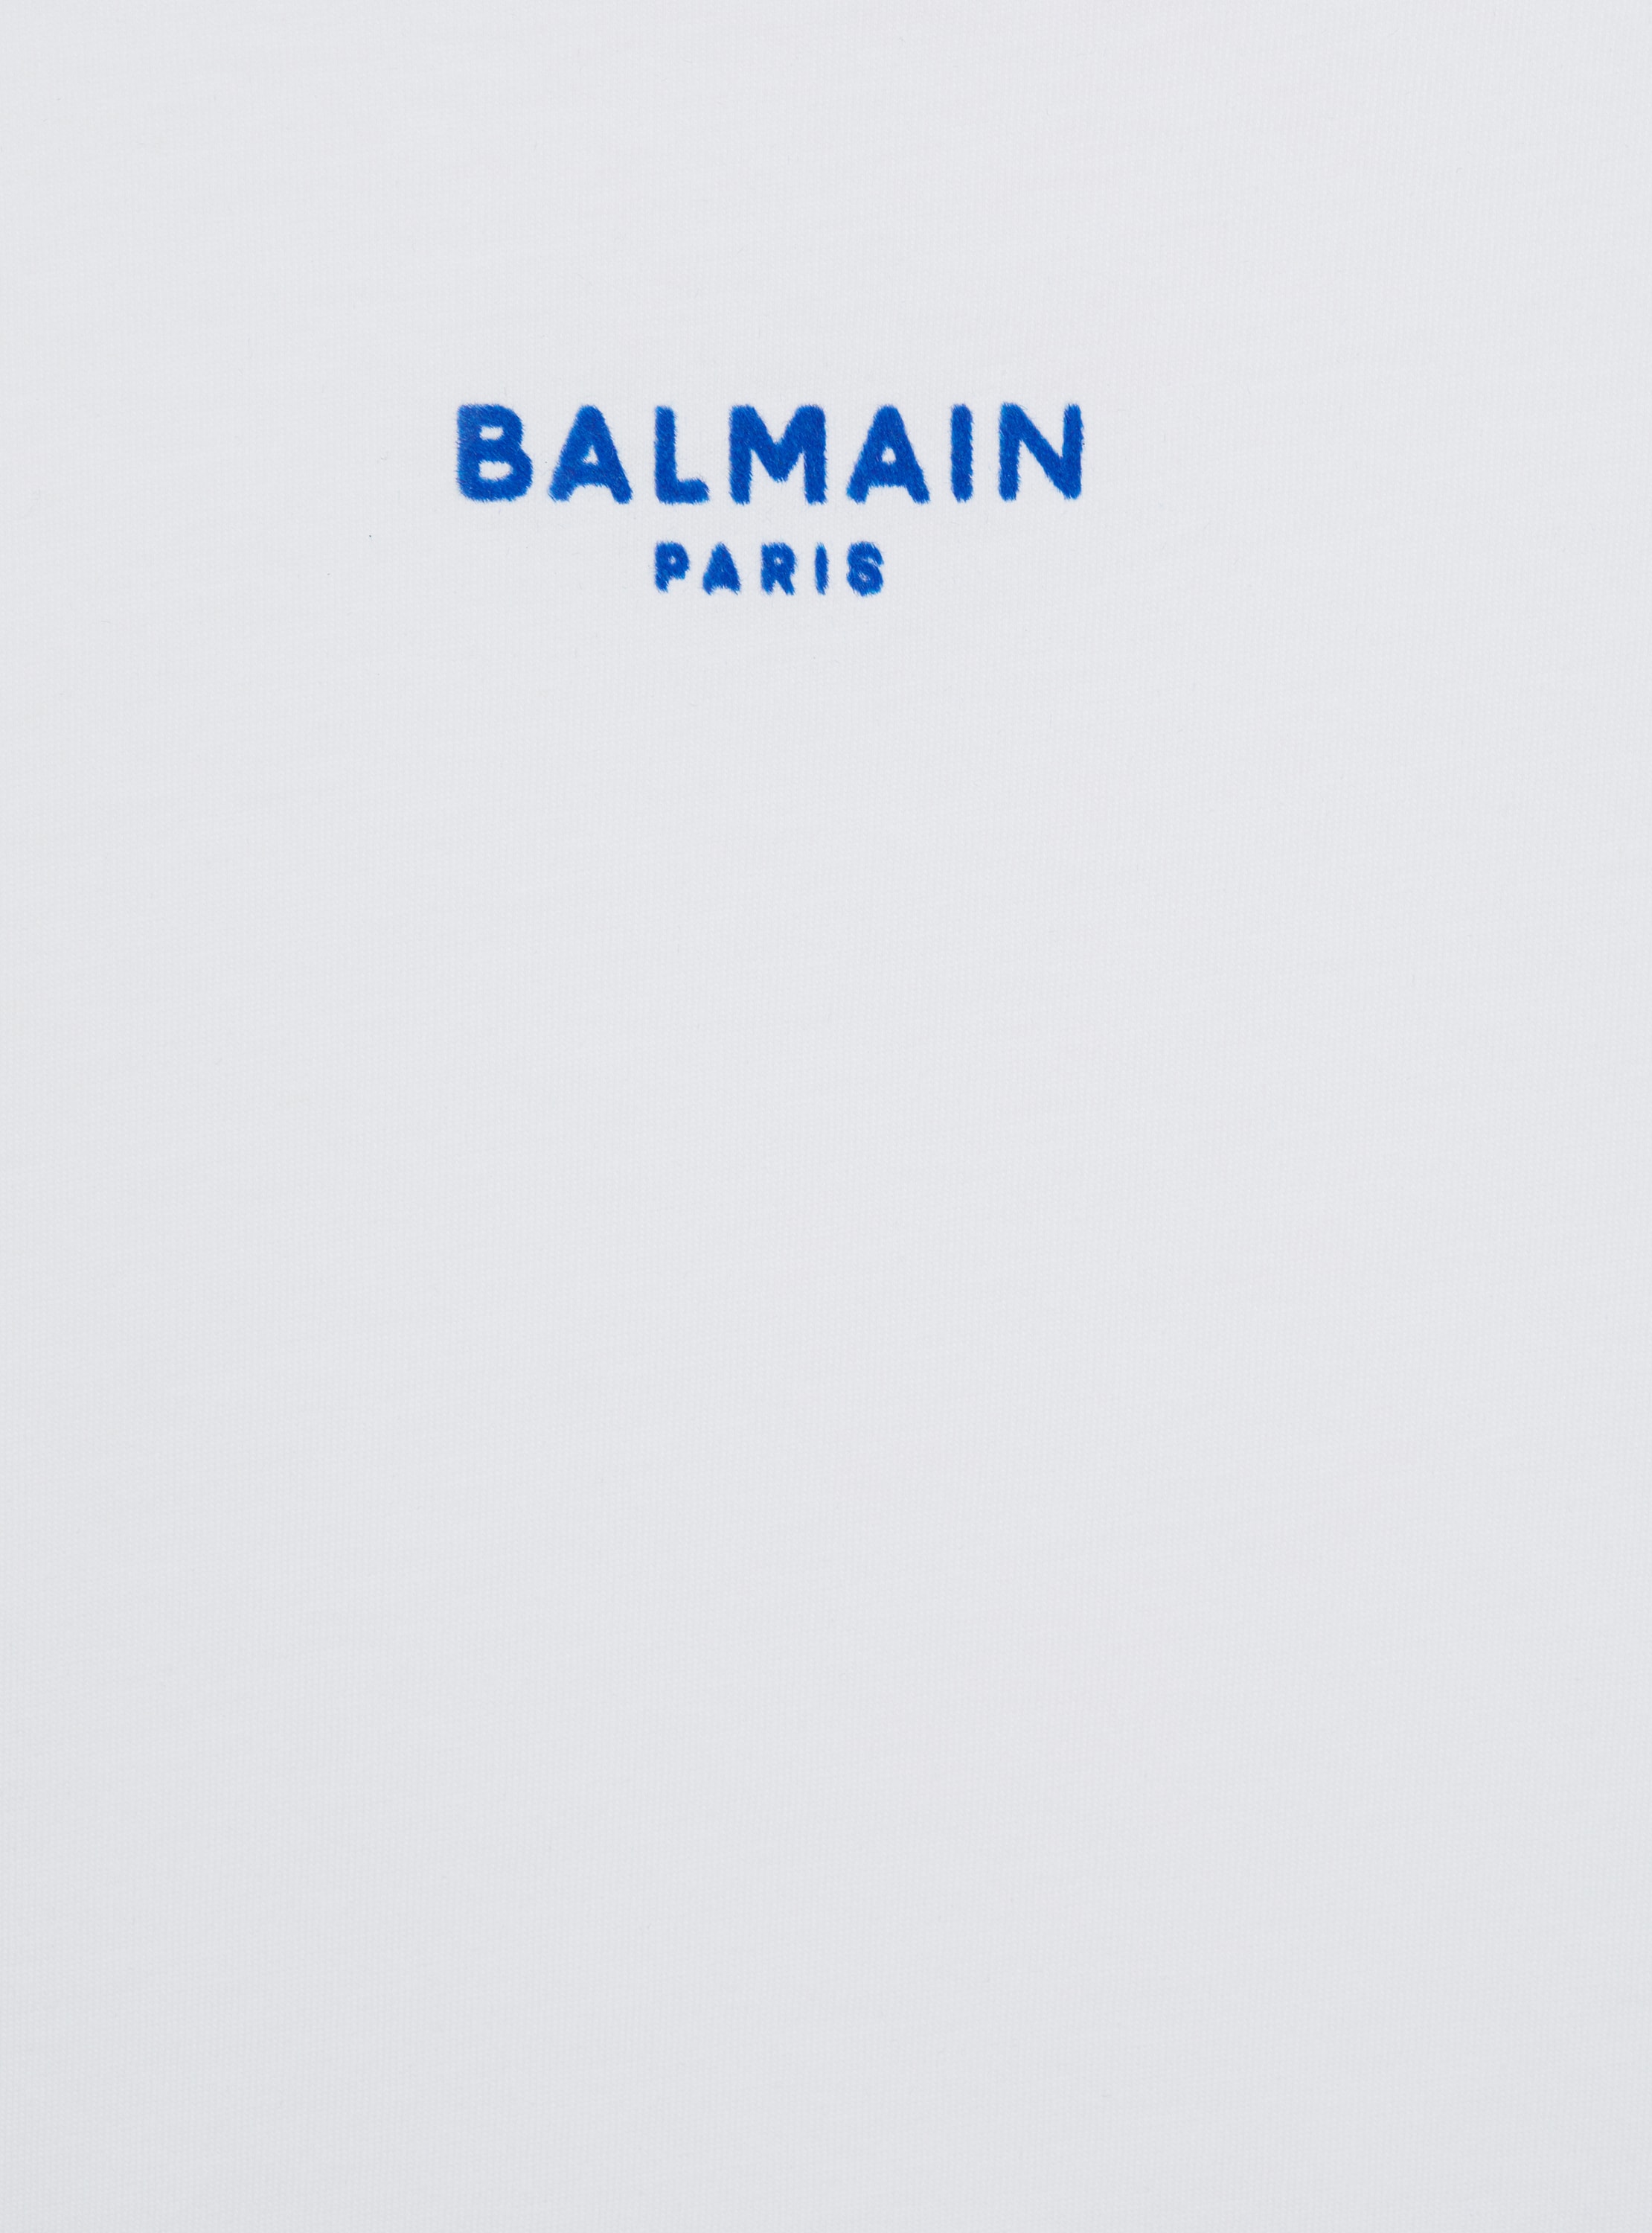 Balmain Paris 플록 장식 티셔츠